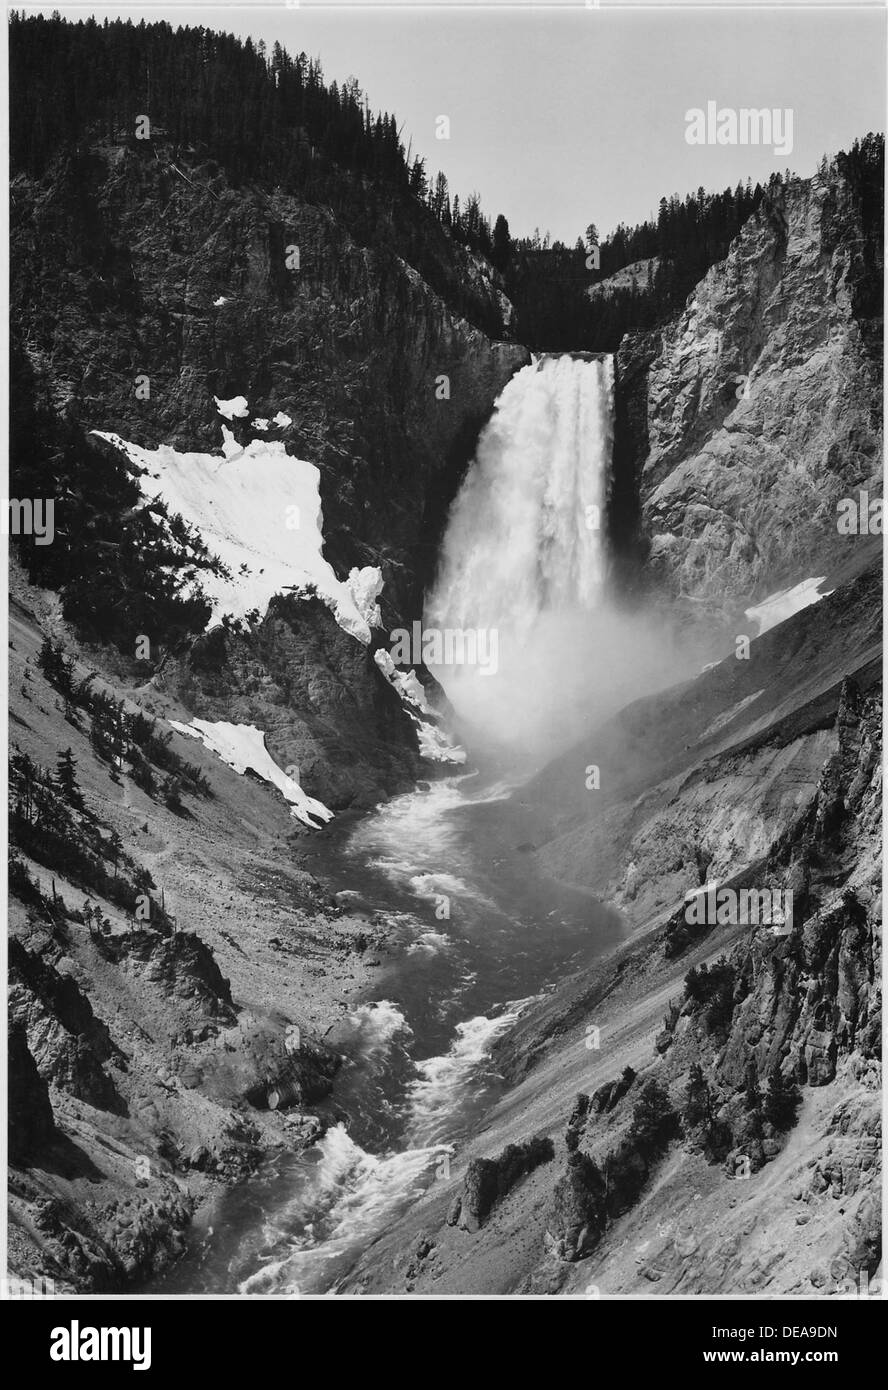 Chutes de Yellowstone, le Parc National de Yellowstone, Wyoming. (Orientation verticale), 1933 - 1942 519993 Banque D'Images